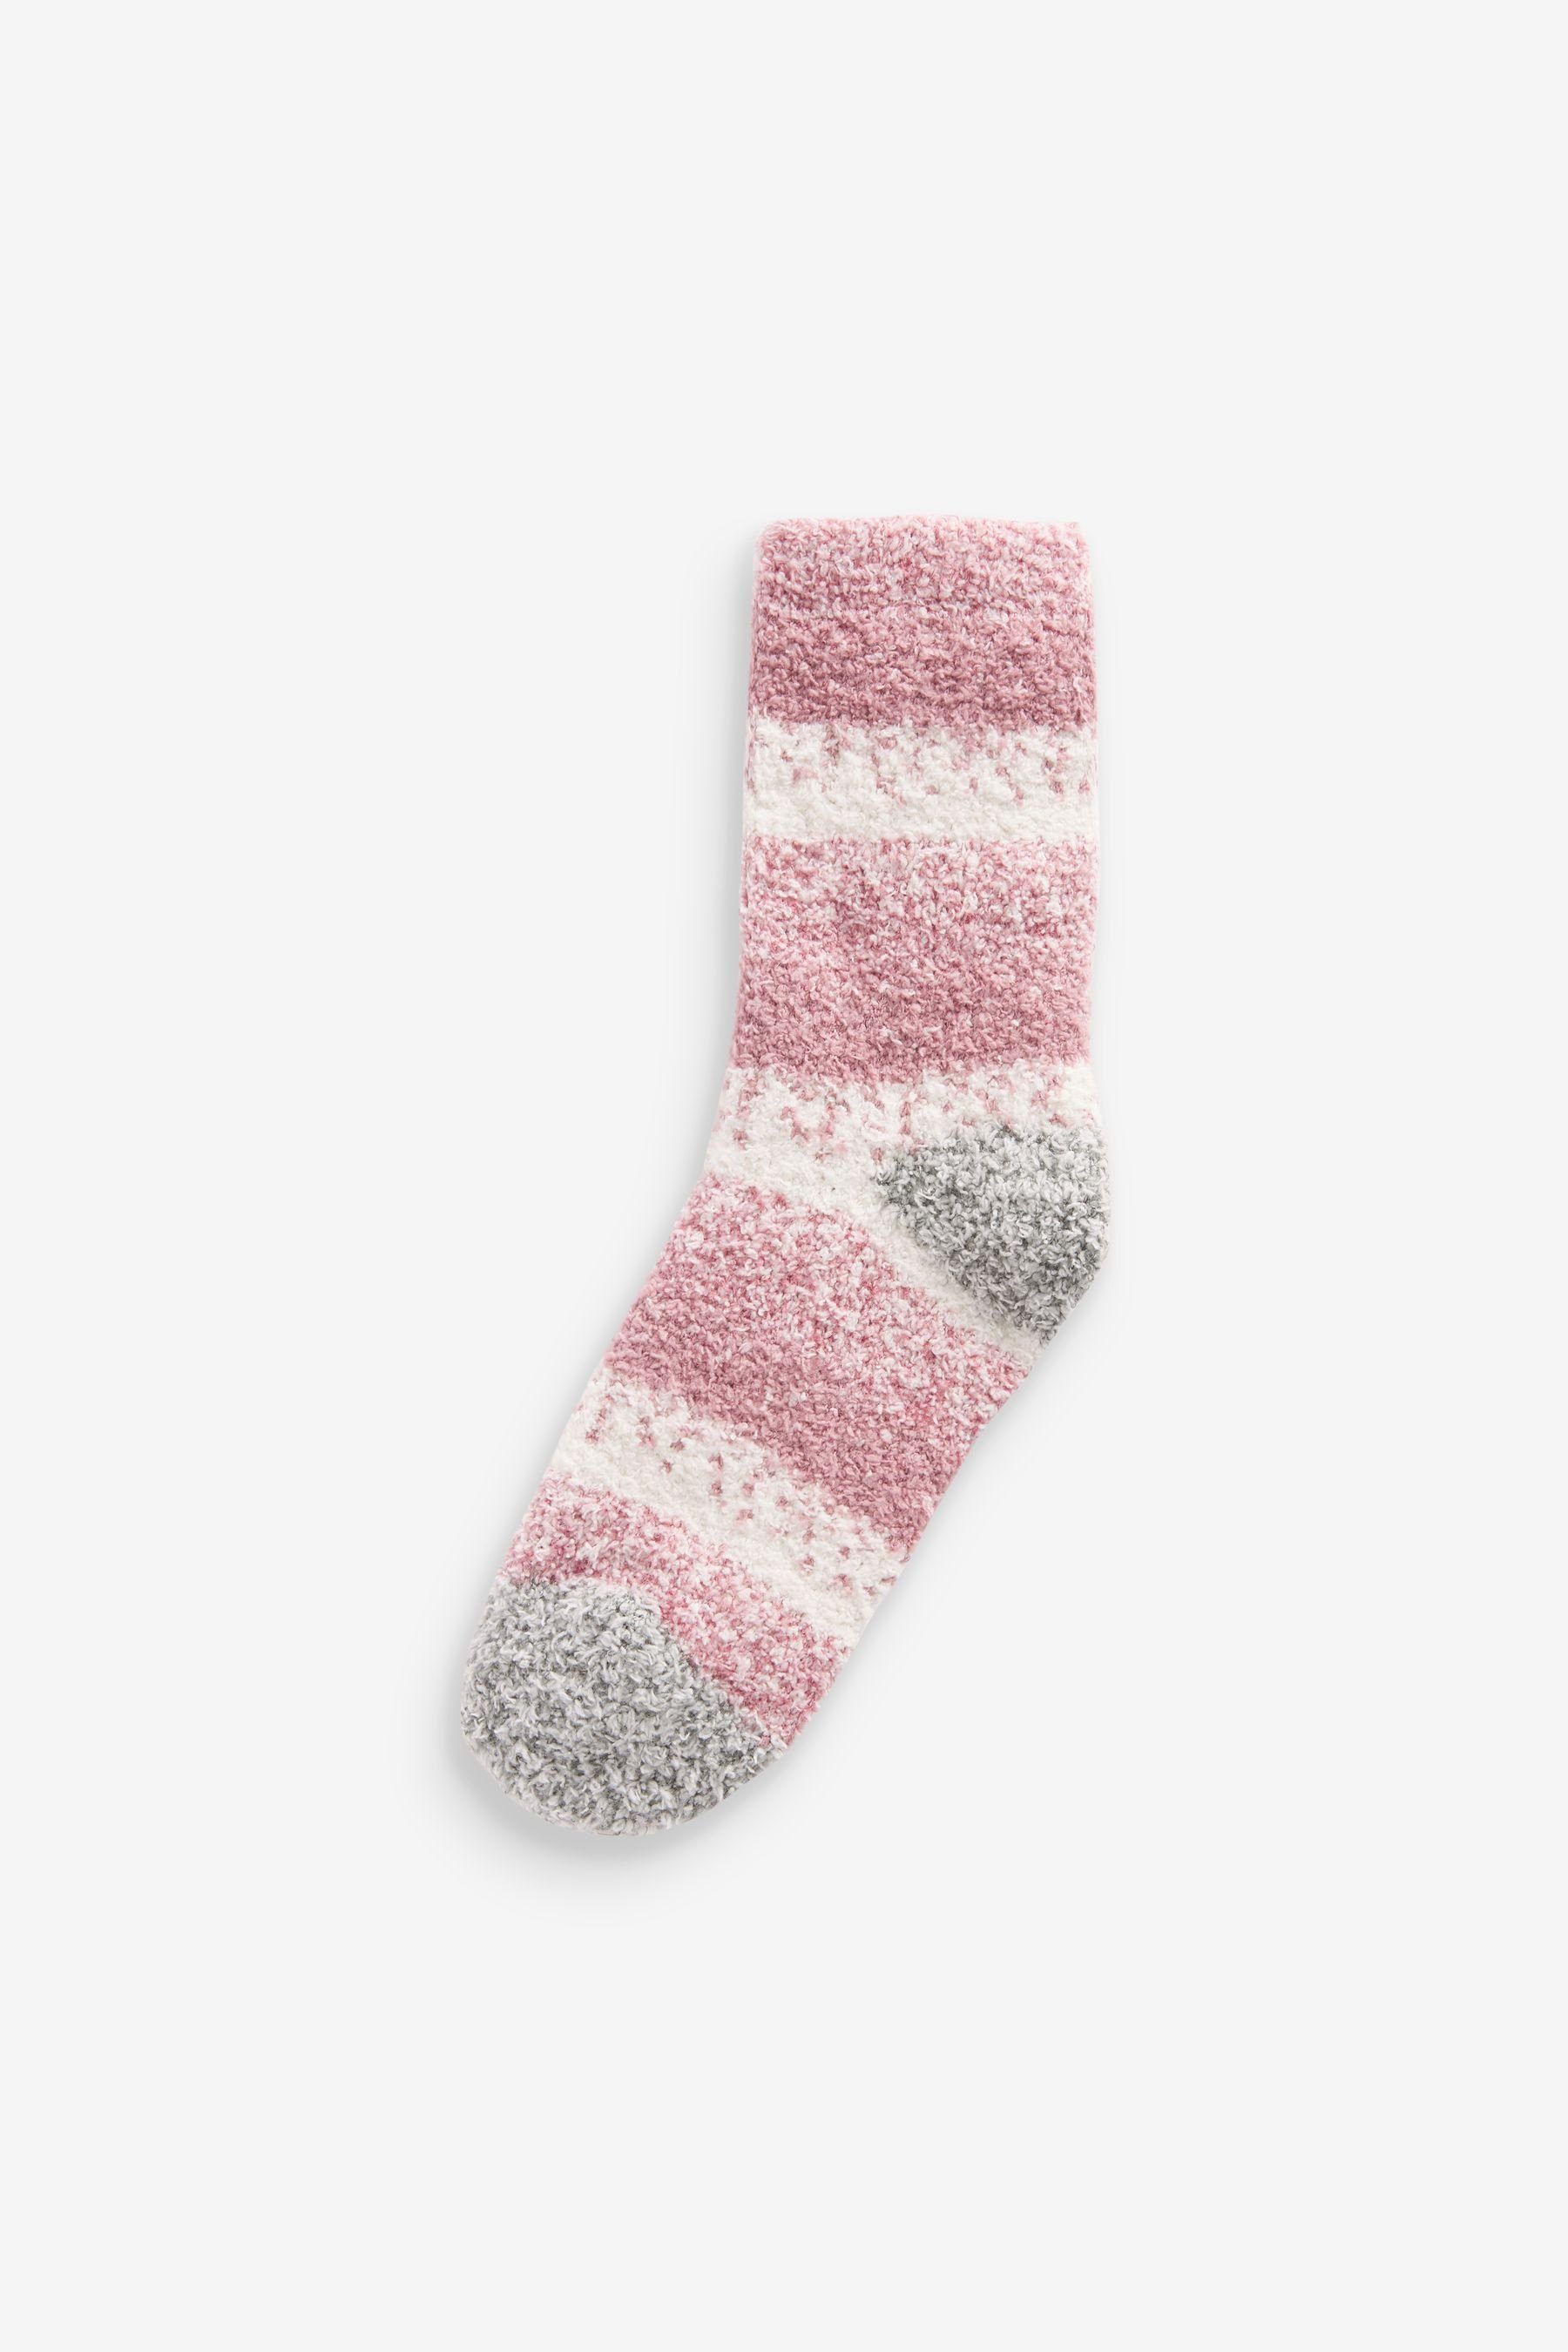 Next Socken, 4er-Pack Kuschelige Haussocken Pink/Grey (4-Paar)